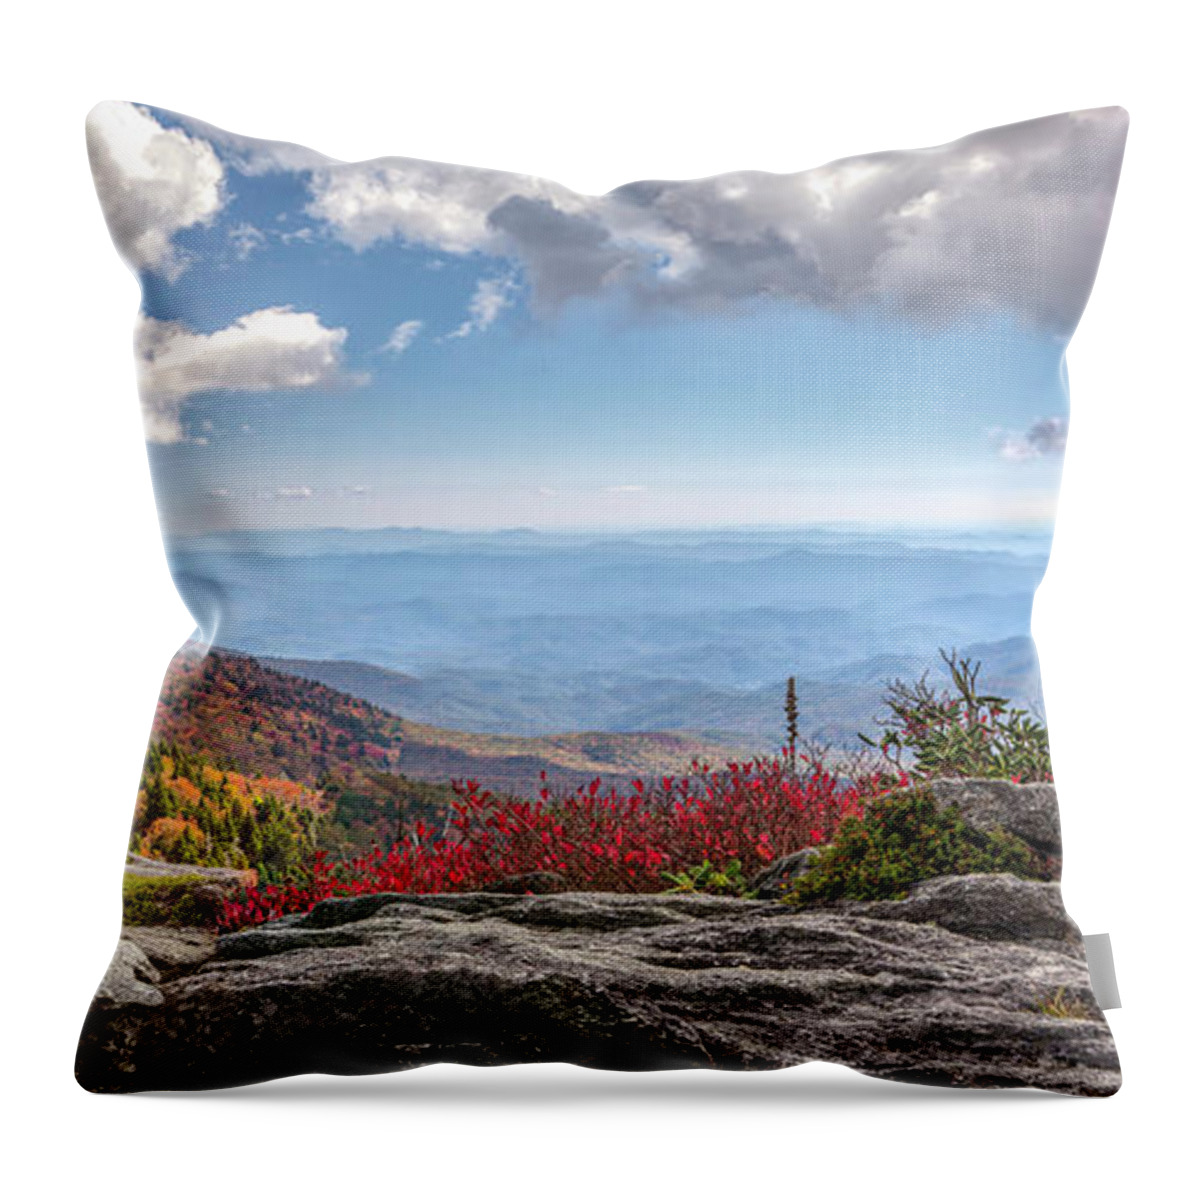 Panorama Throw Pillow featuring the photograph Grandfather Mountain Panorama 02 by Jim Dollar